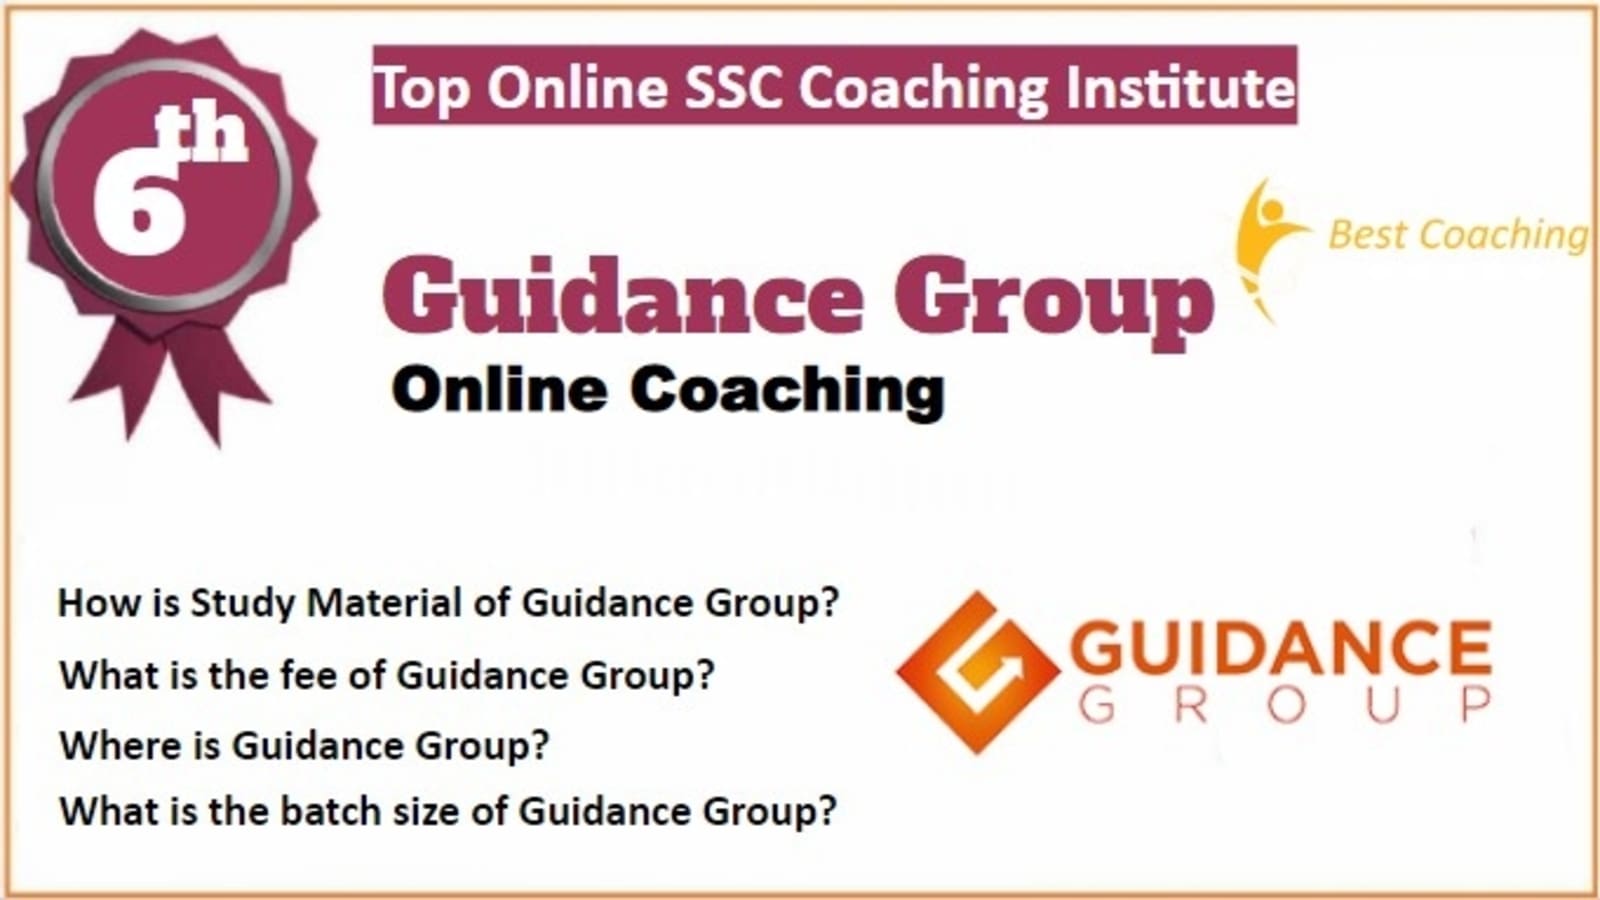 Rank 6 Best Online SSC Coaching